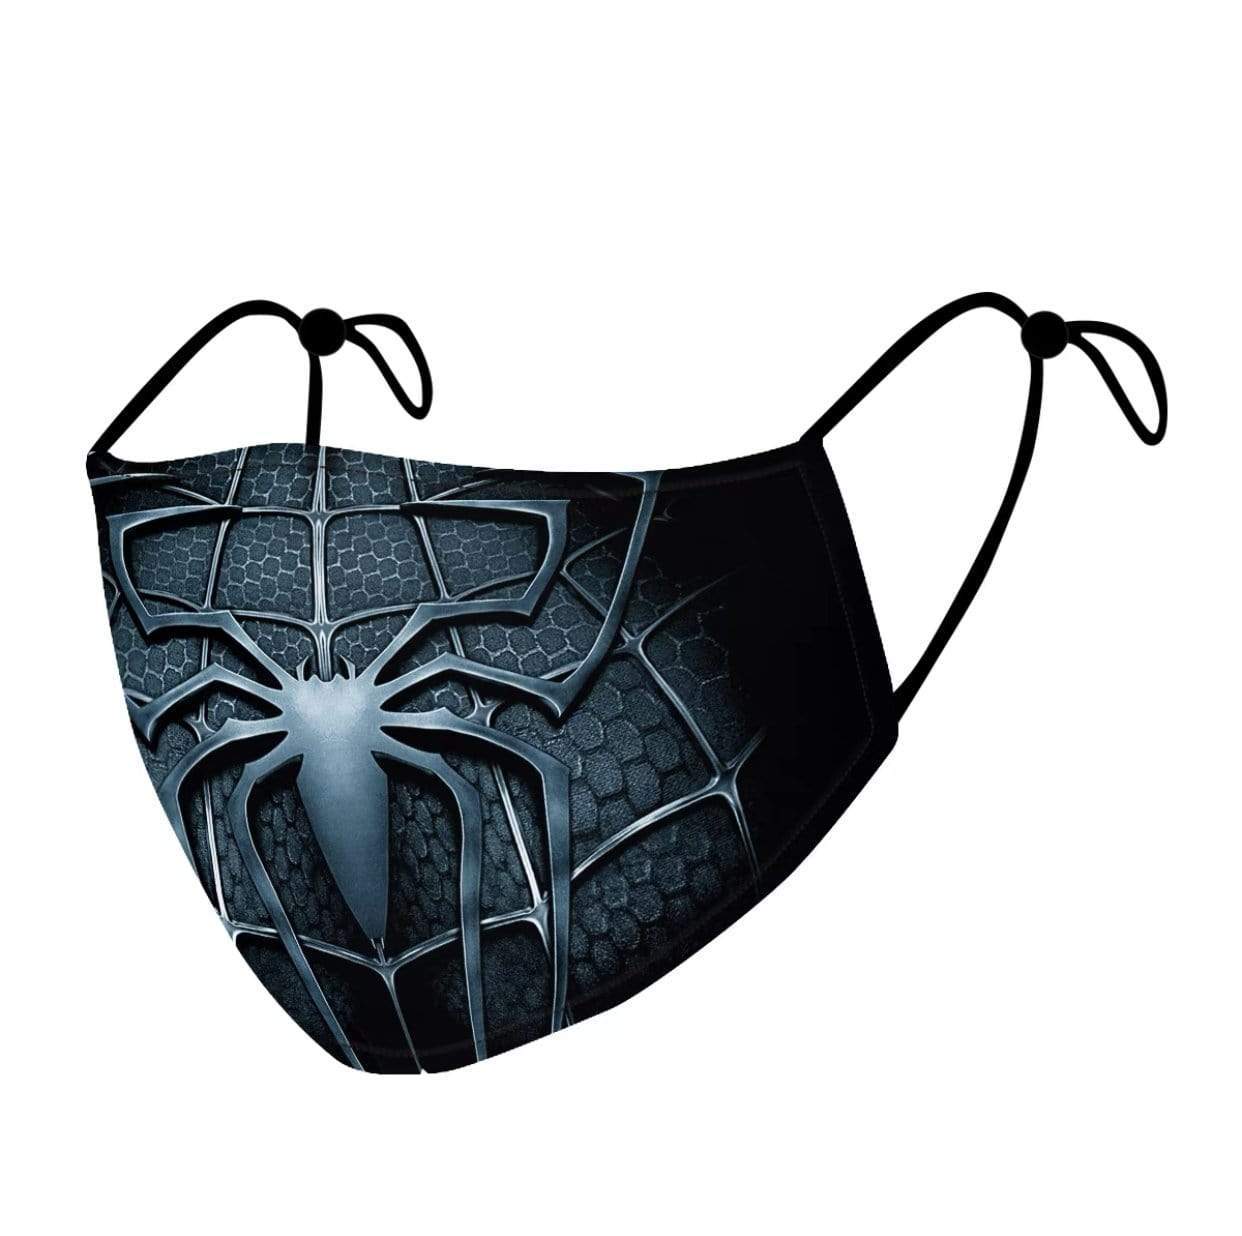 Helms Store Masks Spiderman Reusable & Adjustable Adults Face Mask with filter pocket